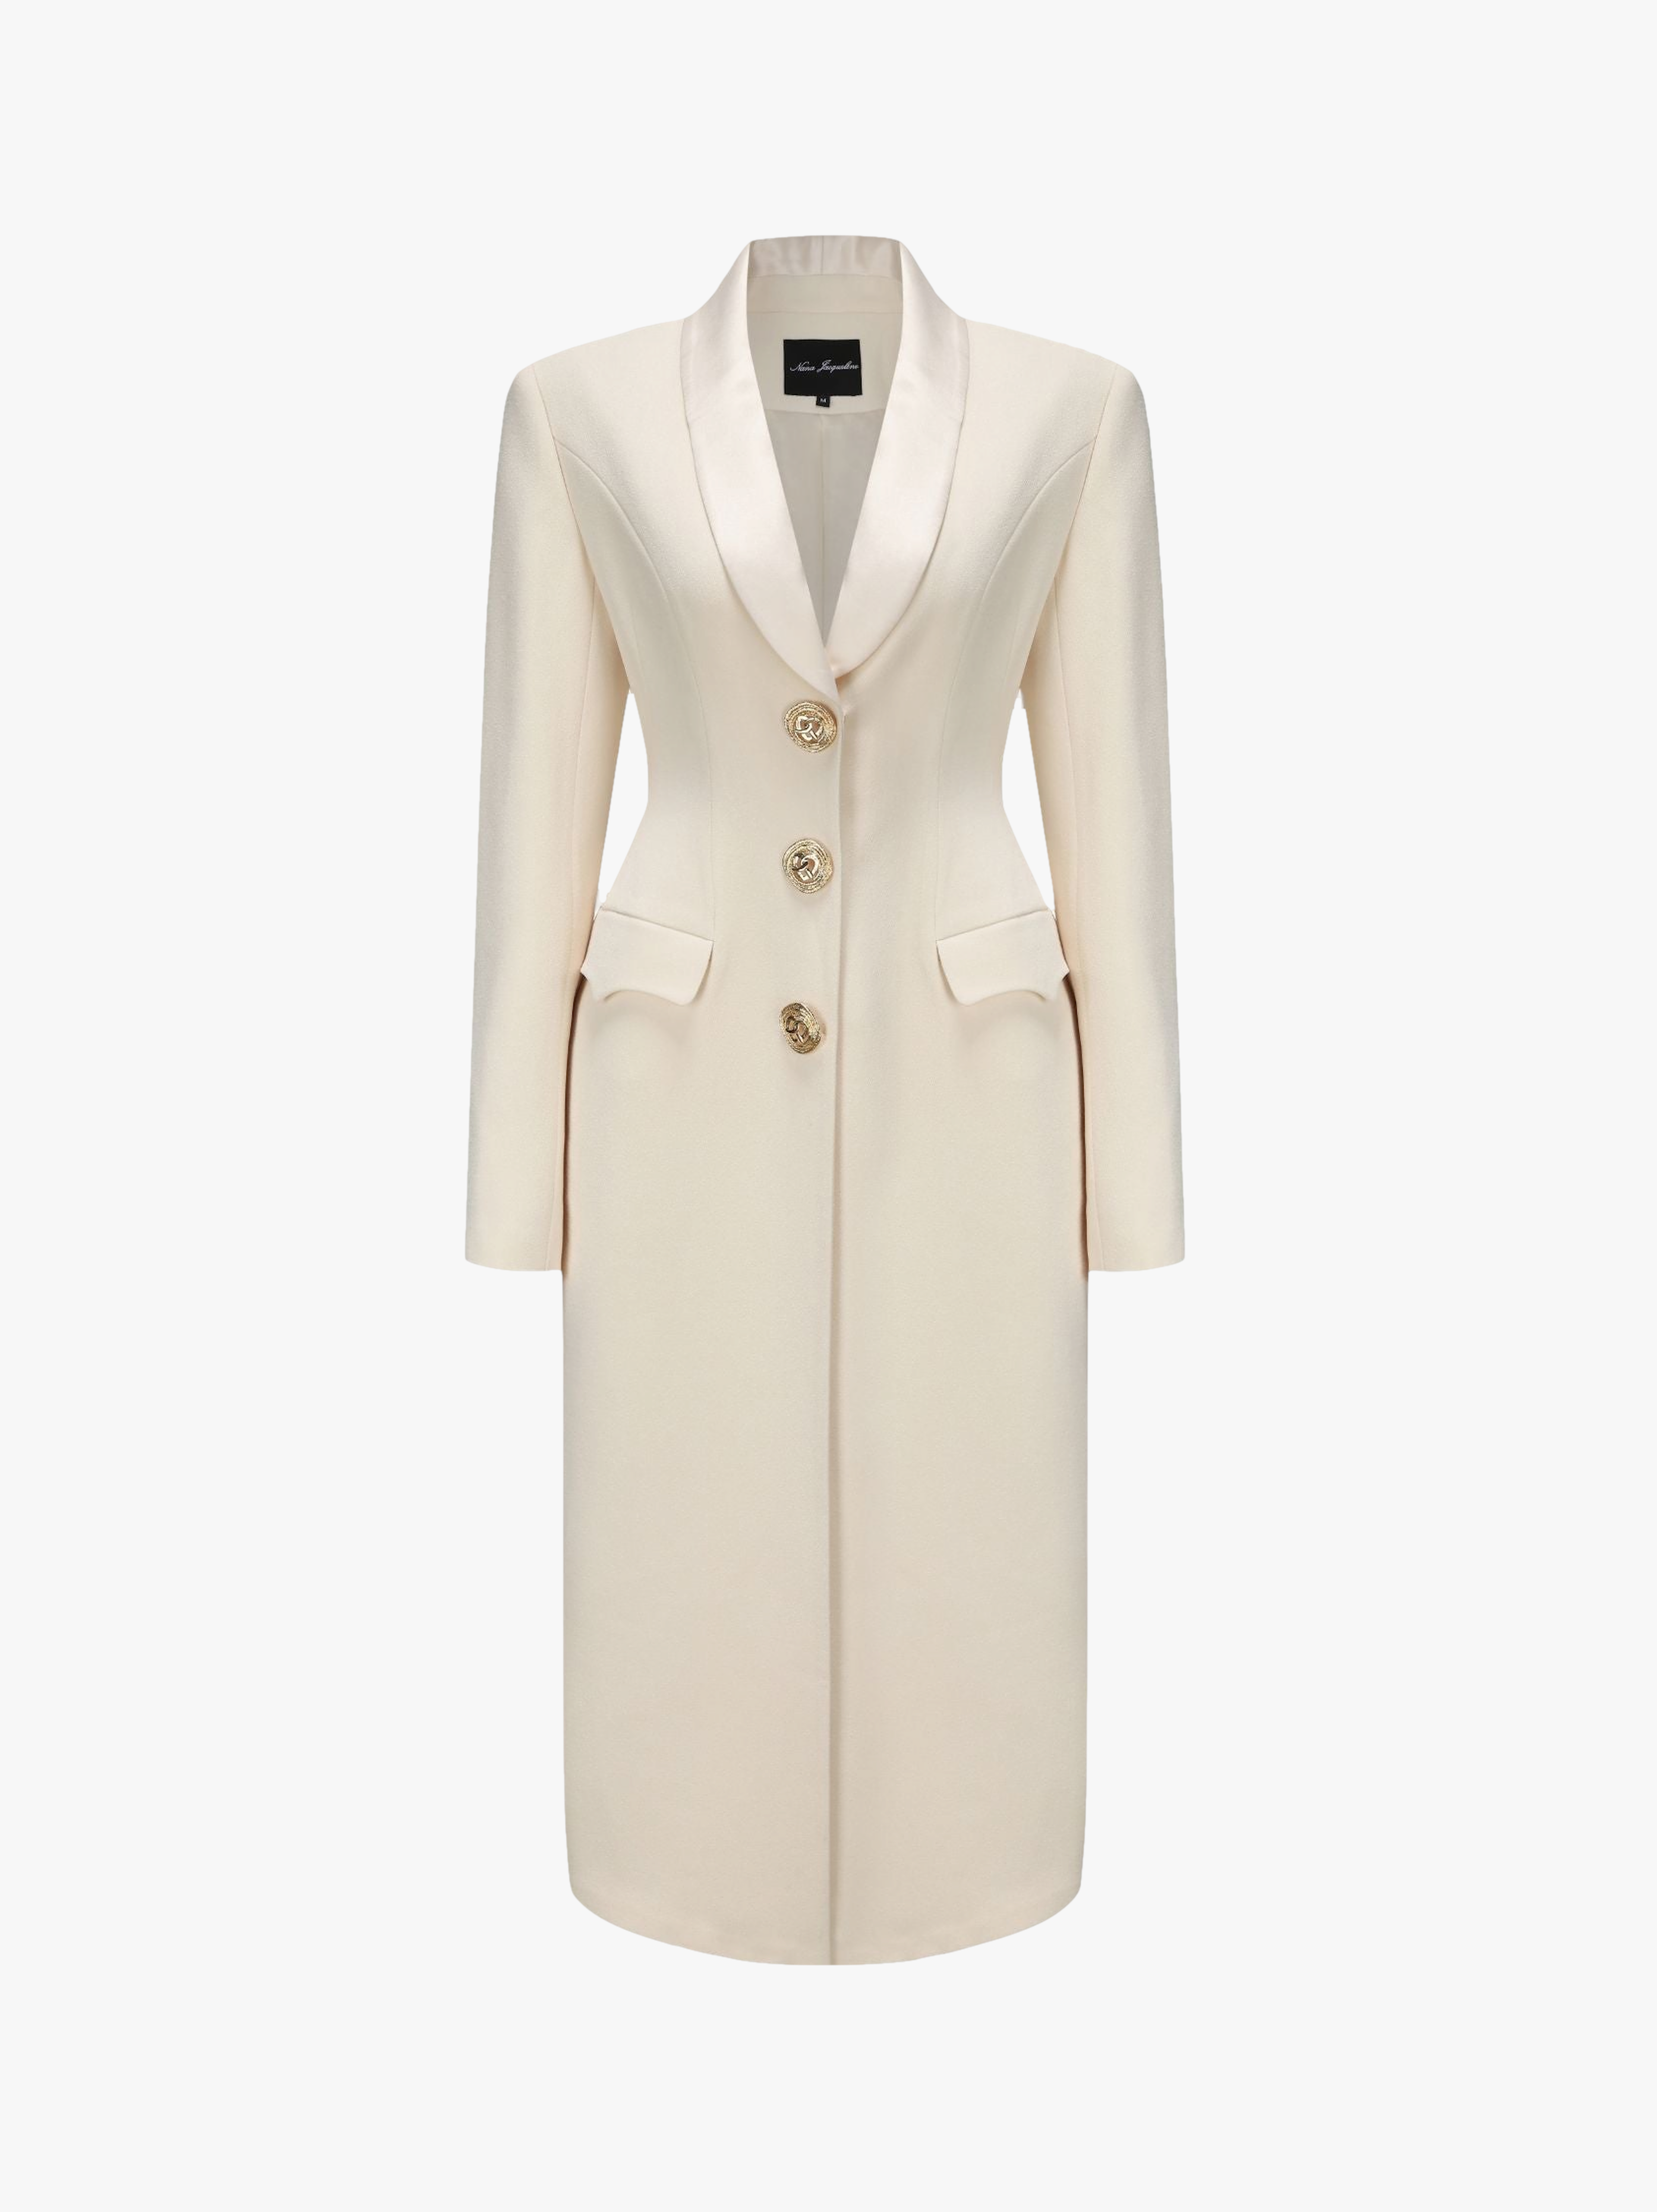 Shop Evie Long Suit Jacket (White) from Nana Jacqueline at Seezona